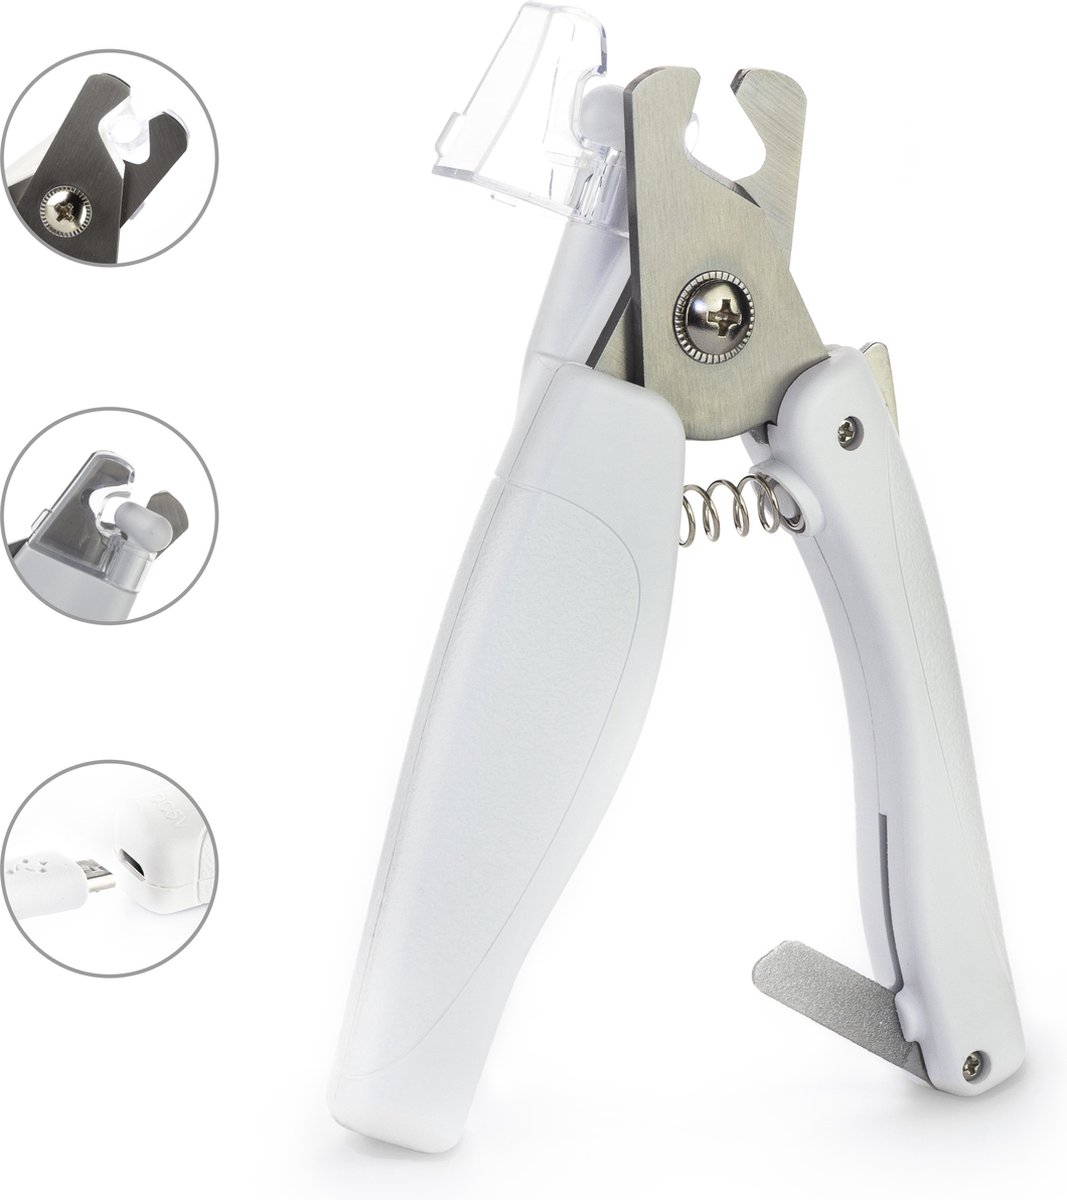 Huisdier nagelknipper - LED lampje - Oplaadbaar via USB - Opvangbakje - Vijl - Honden nagelknipper - Veilig Knippen - RVS - Wit - Merkloos